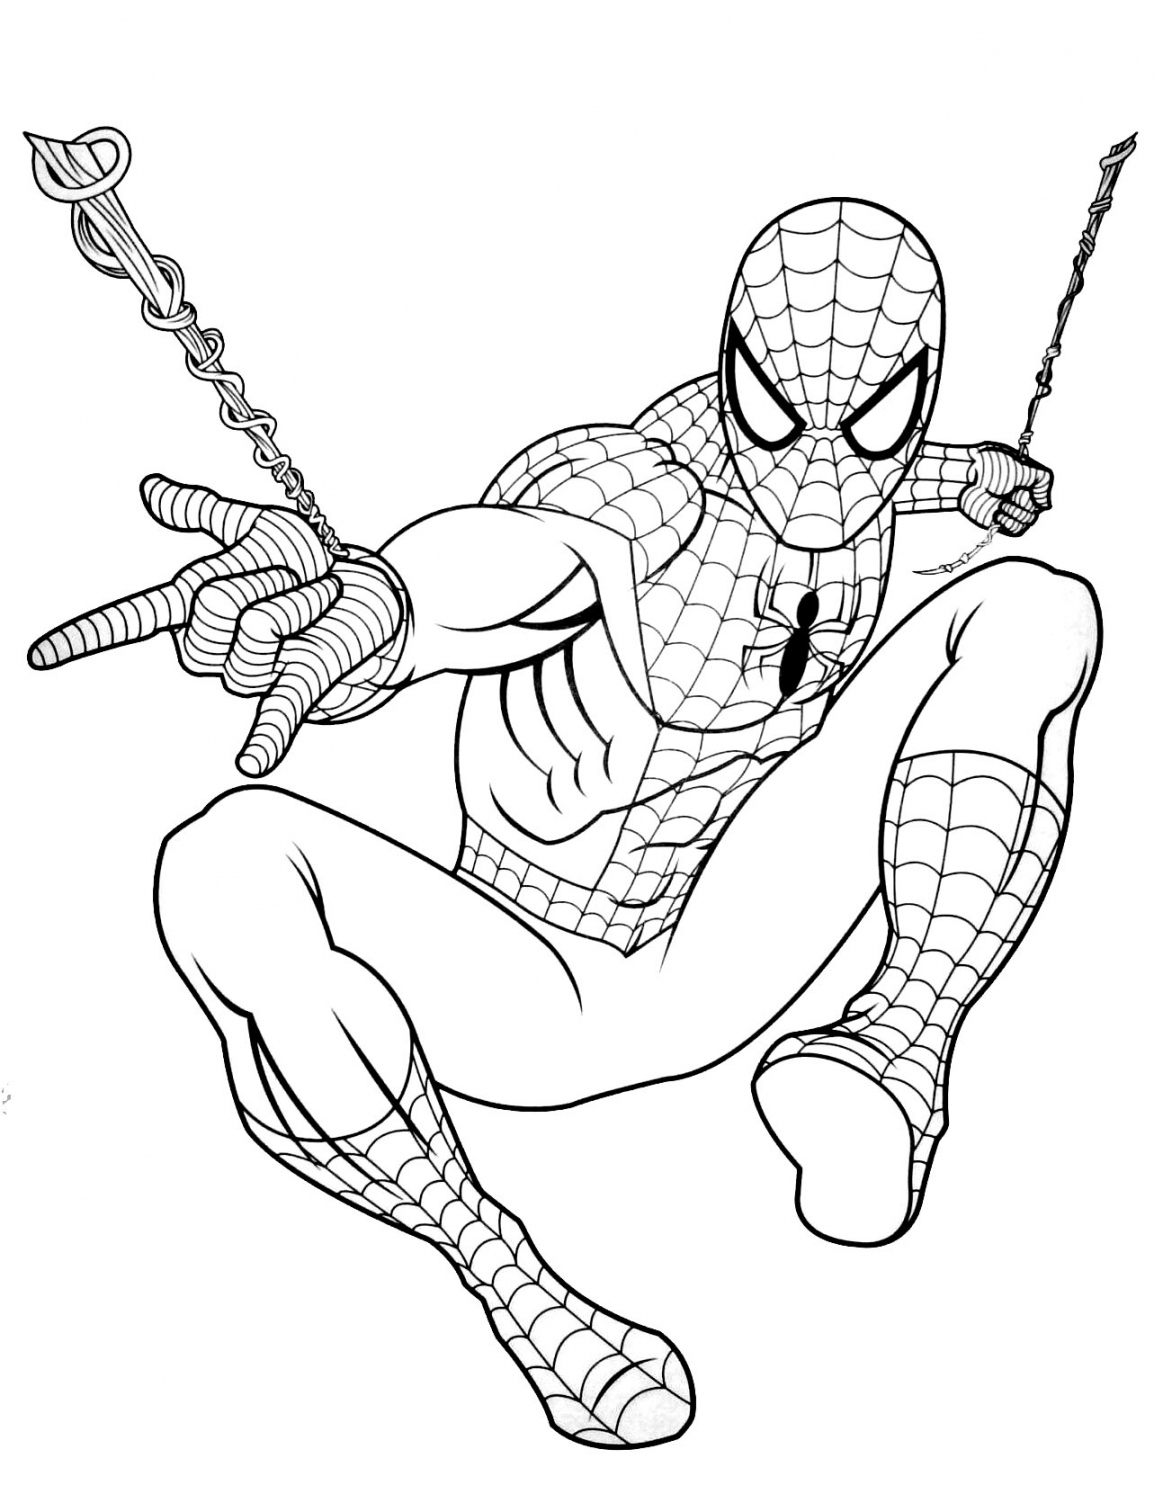 Free Printable Spiderman Color Pages - Printable - Free Spiderman drawing to print and color - Spiderman Kids